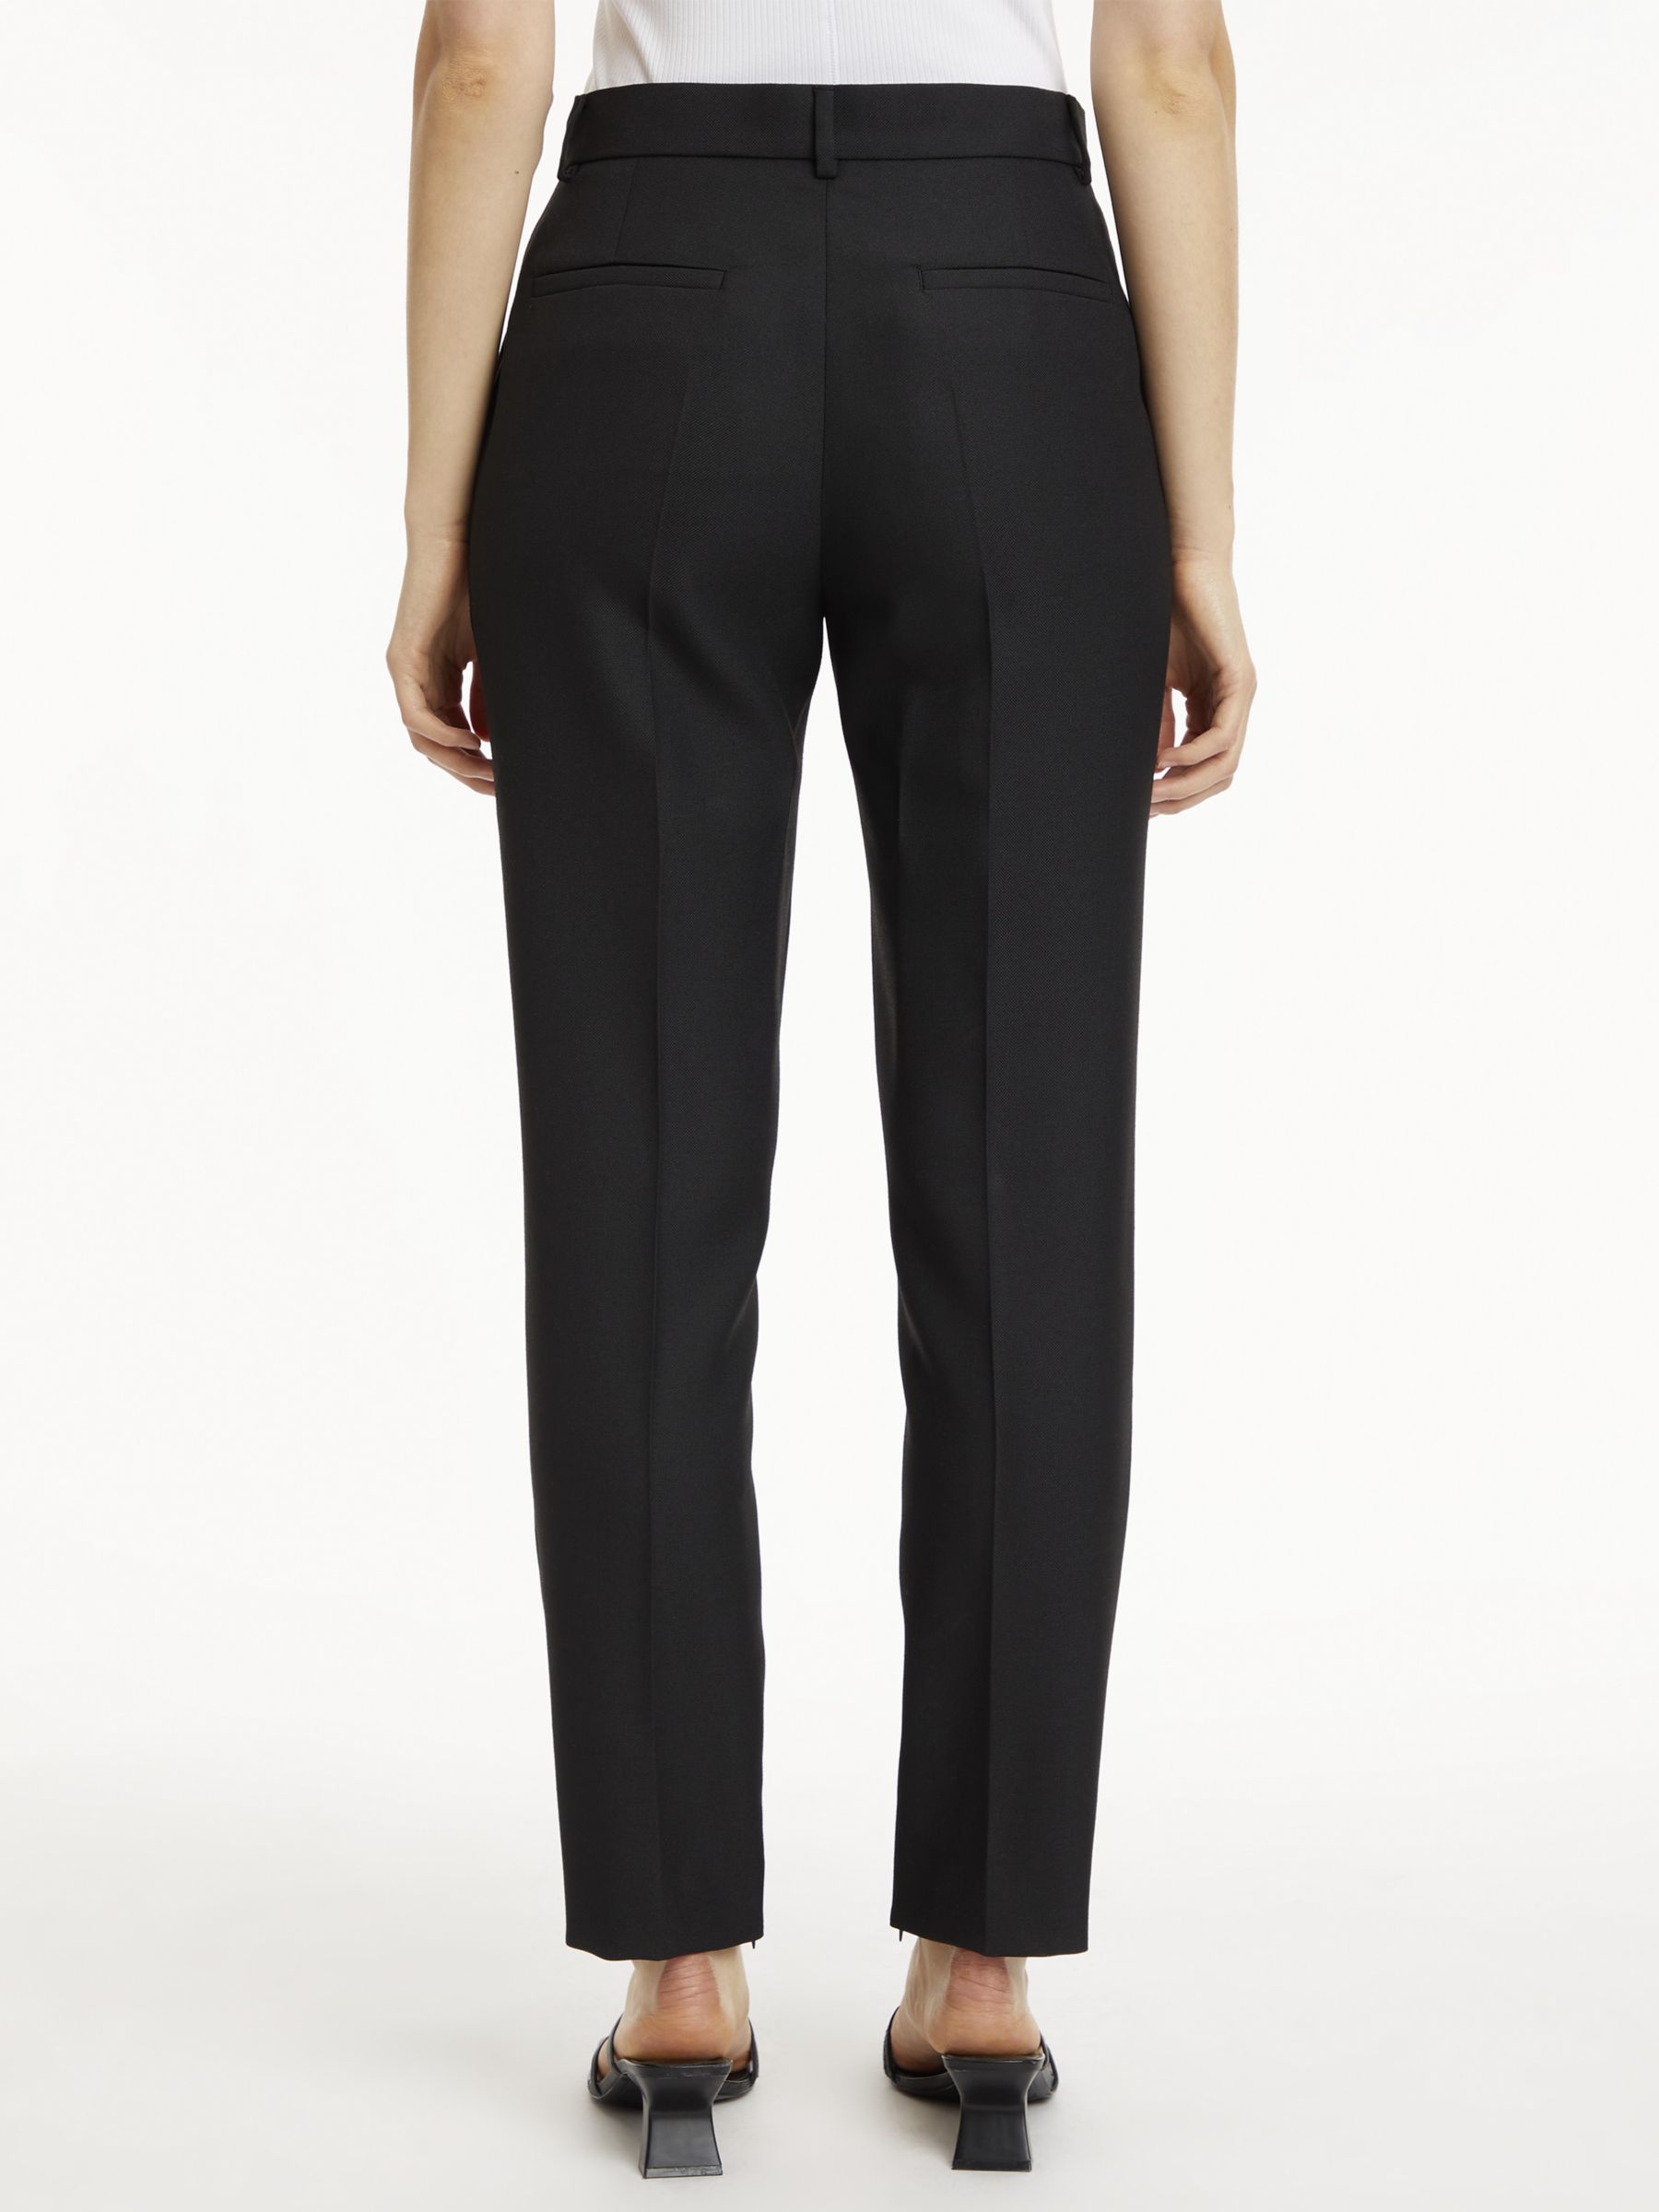 Calvin Klein Slim Fit Tailored Trousers, Black, 6